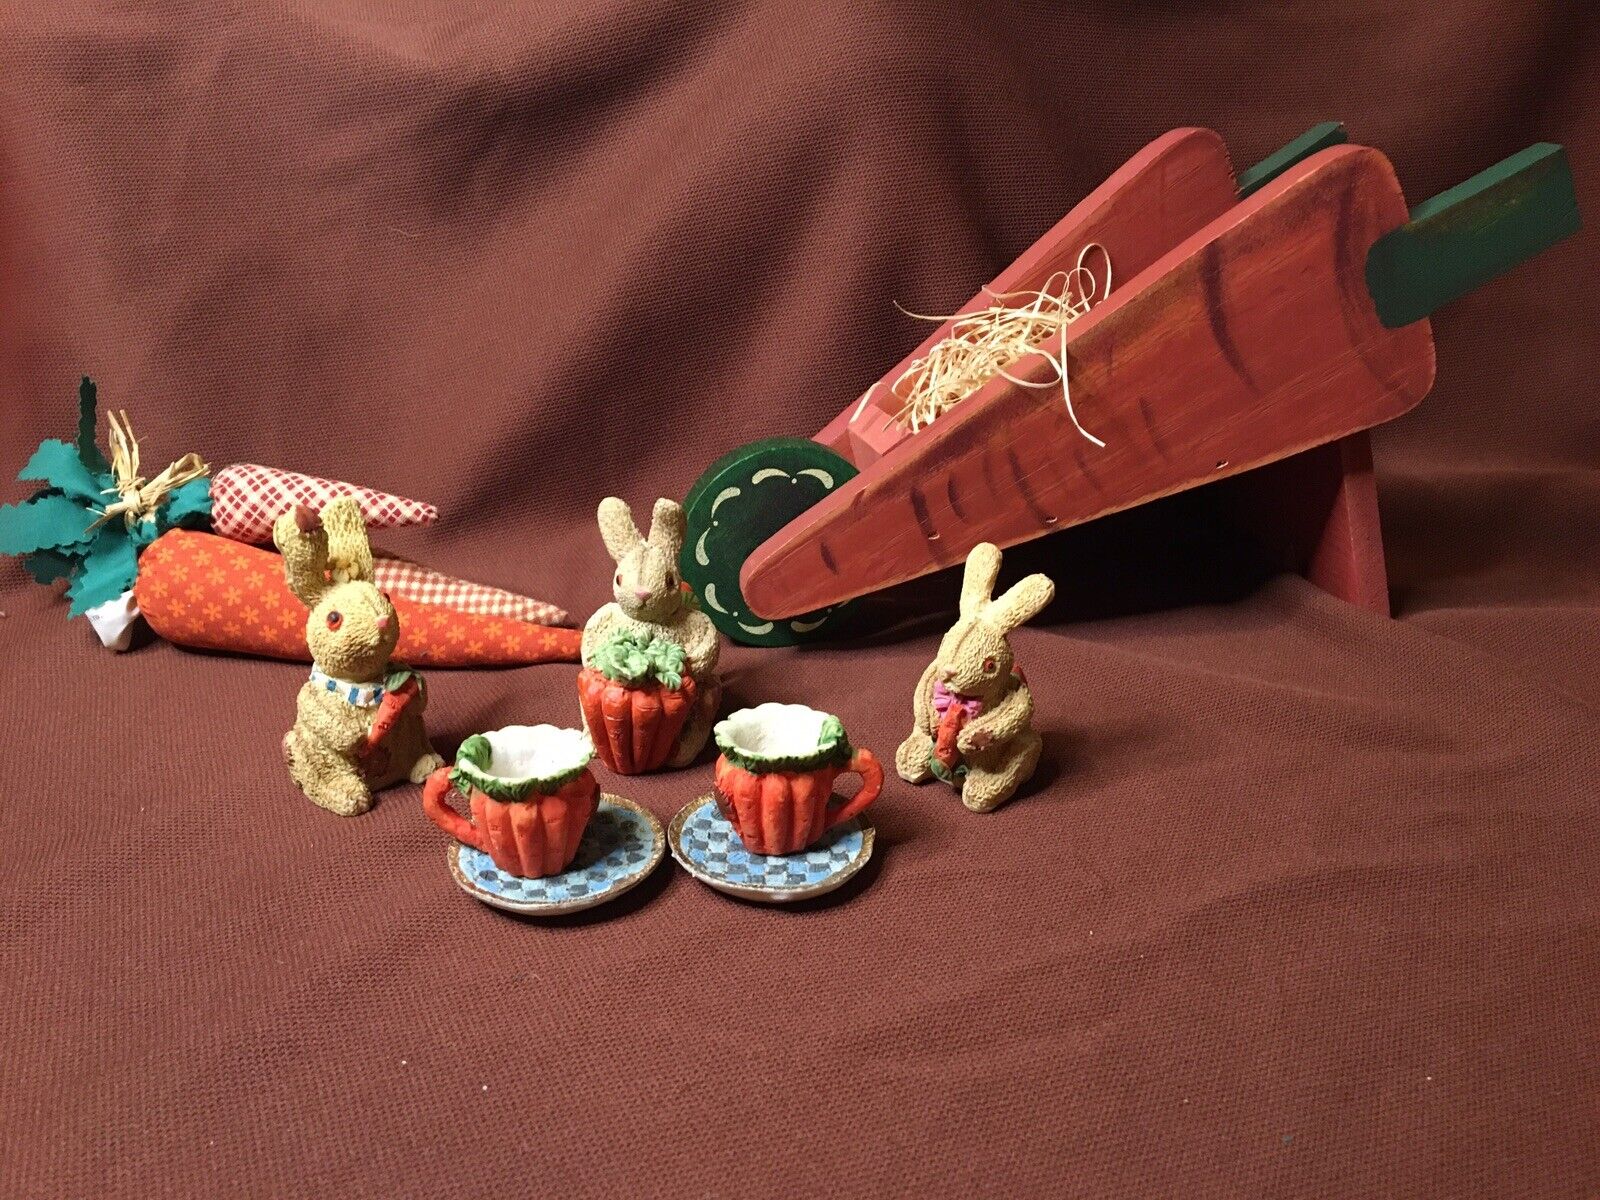 Decorative Miniature Tea Set Theme Spring Bunny Rabbit Family & Carrots Design